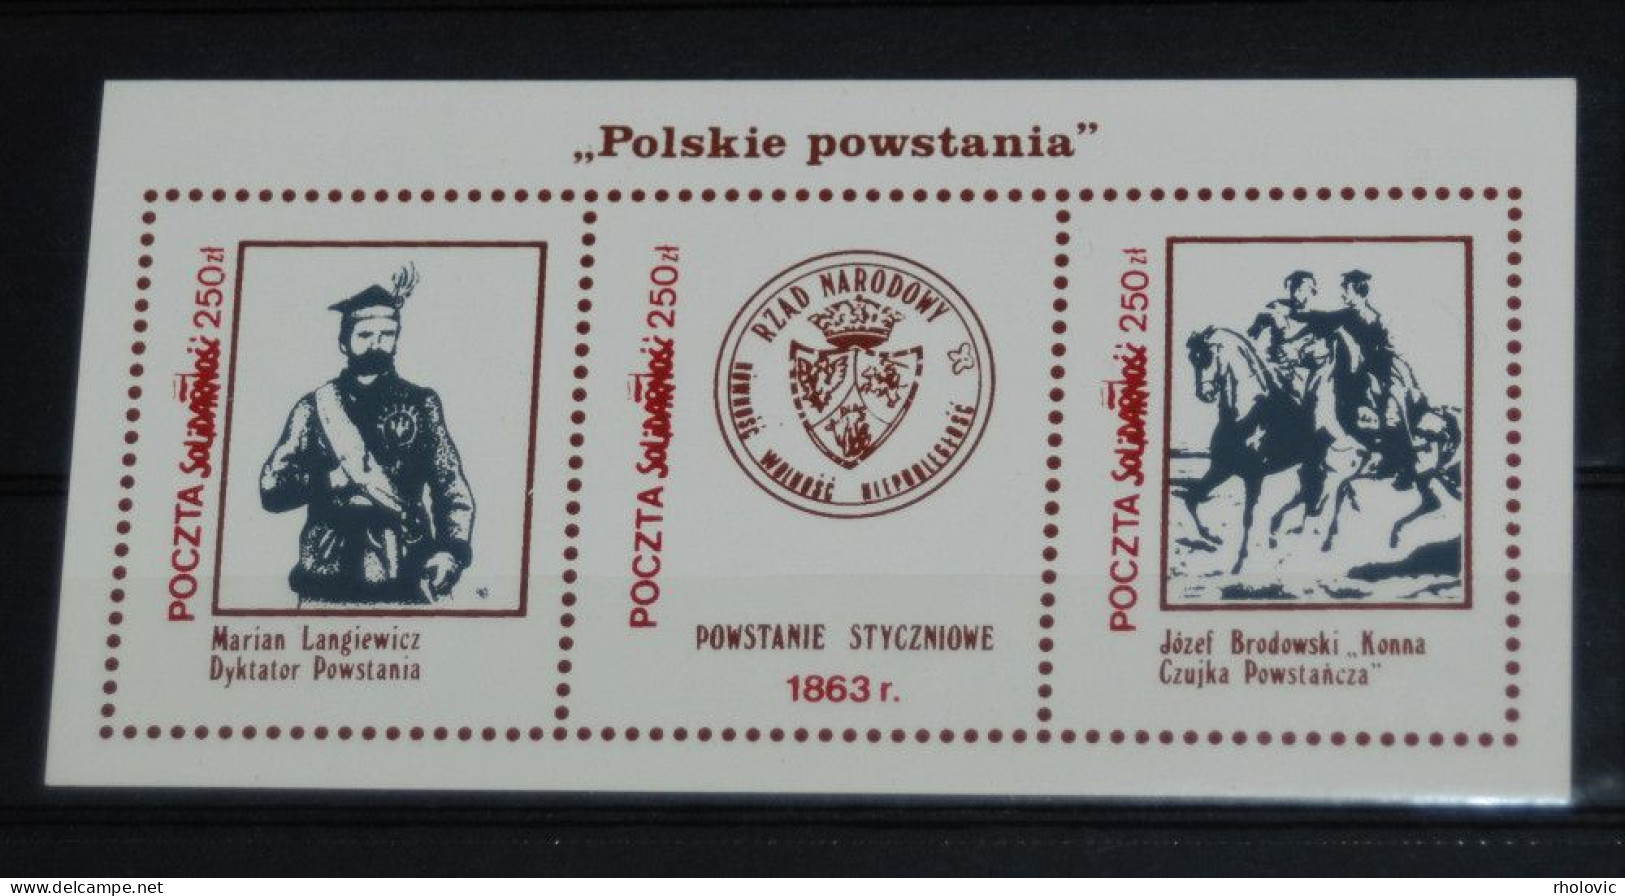 POLAND, Solidarnosc, Military, Imperf, Souvenir Sheet, MNH** - Solidarnosc Labels